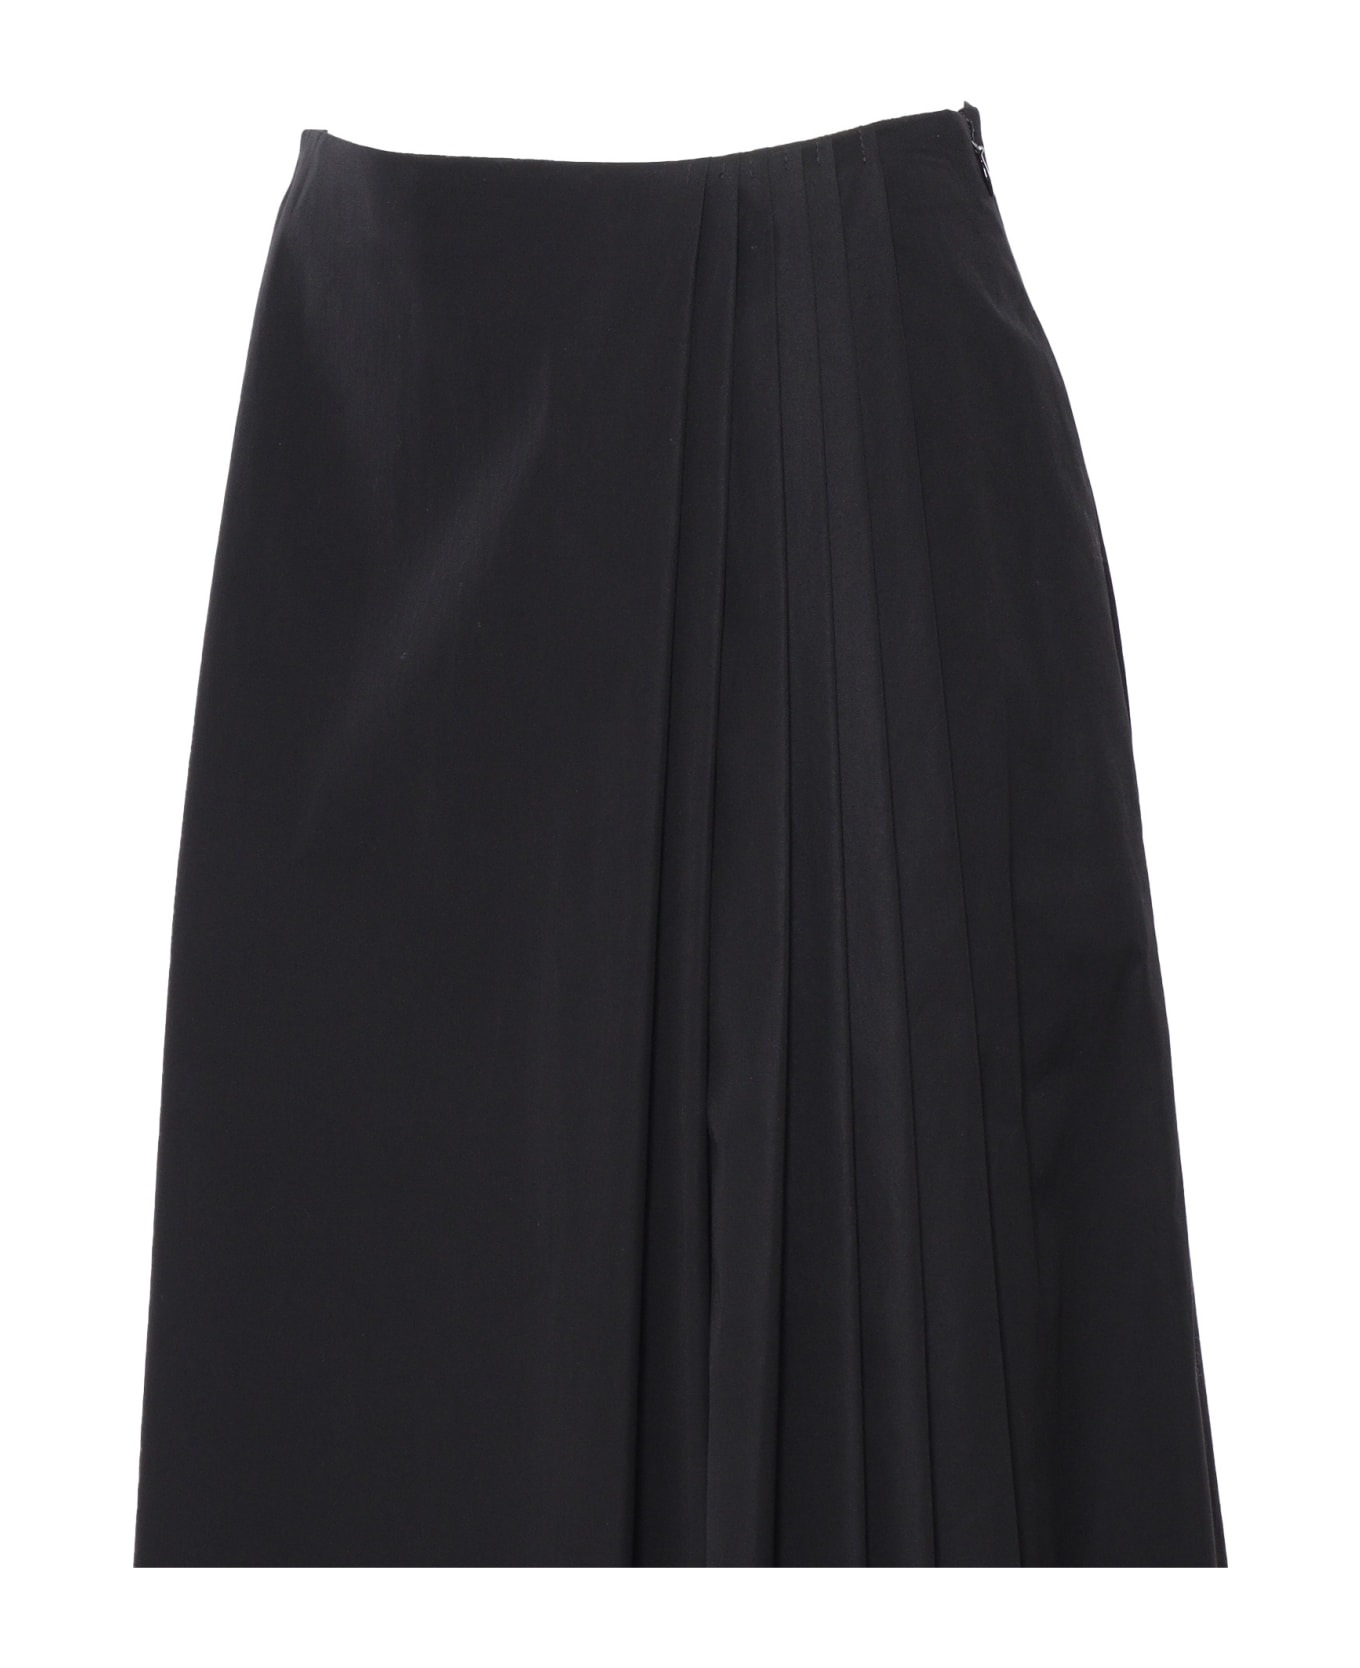 Lorena Antoniazzi Black Skirt With Pleats - BLACK スカート